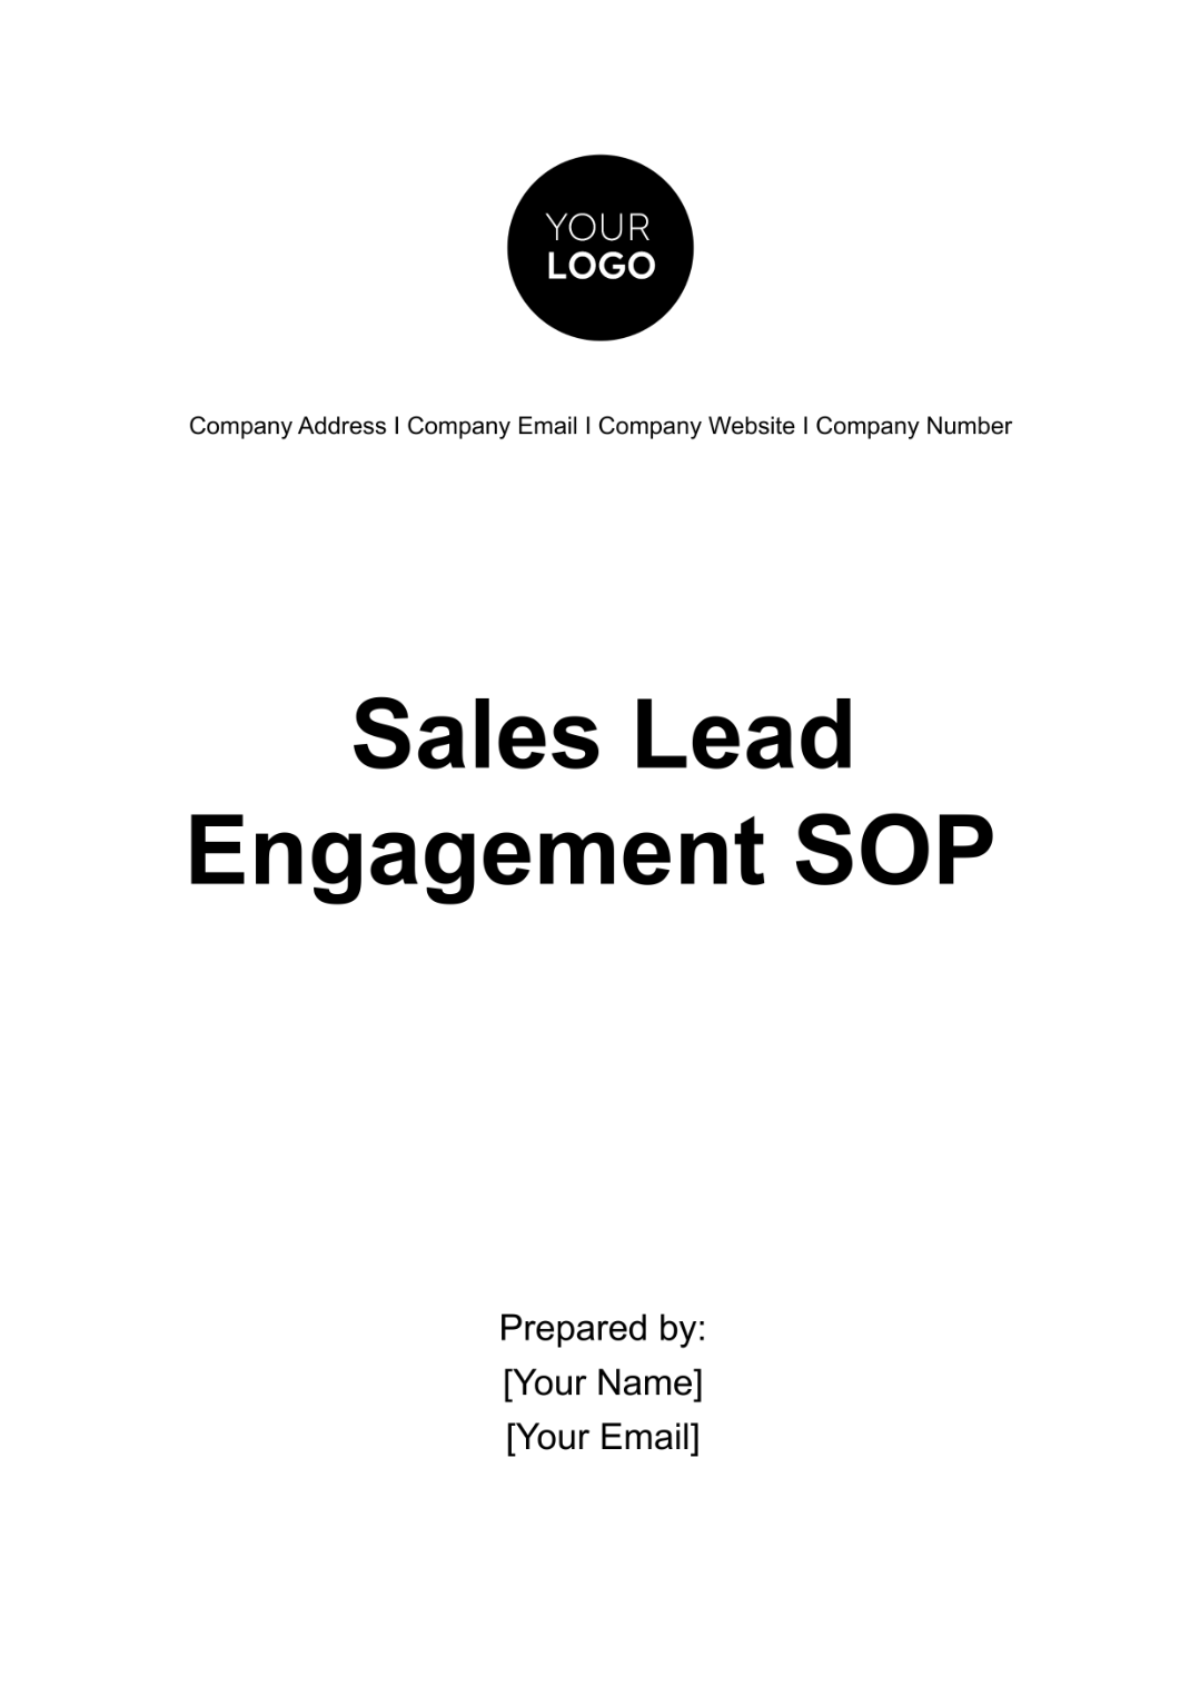 Sales Lead Engagement SOP Template